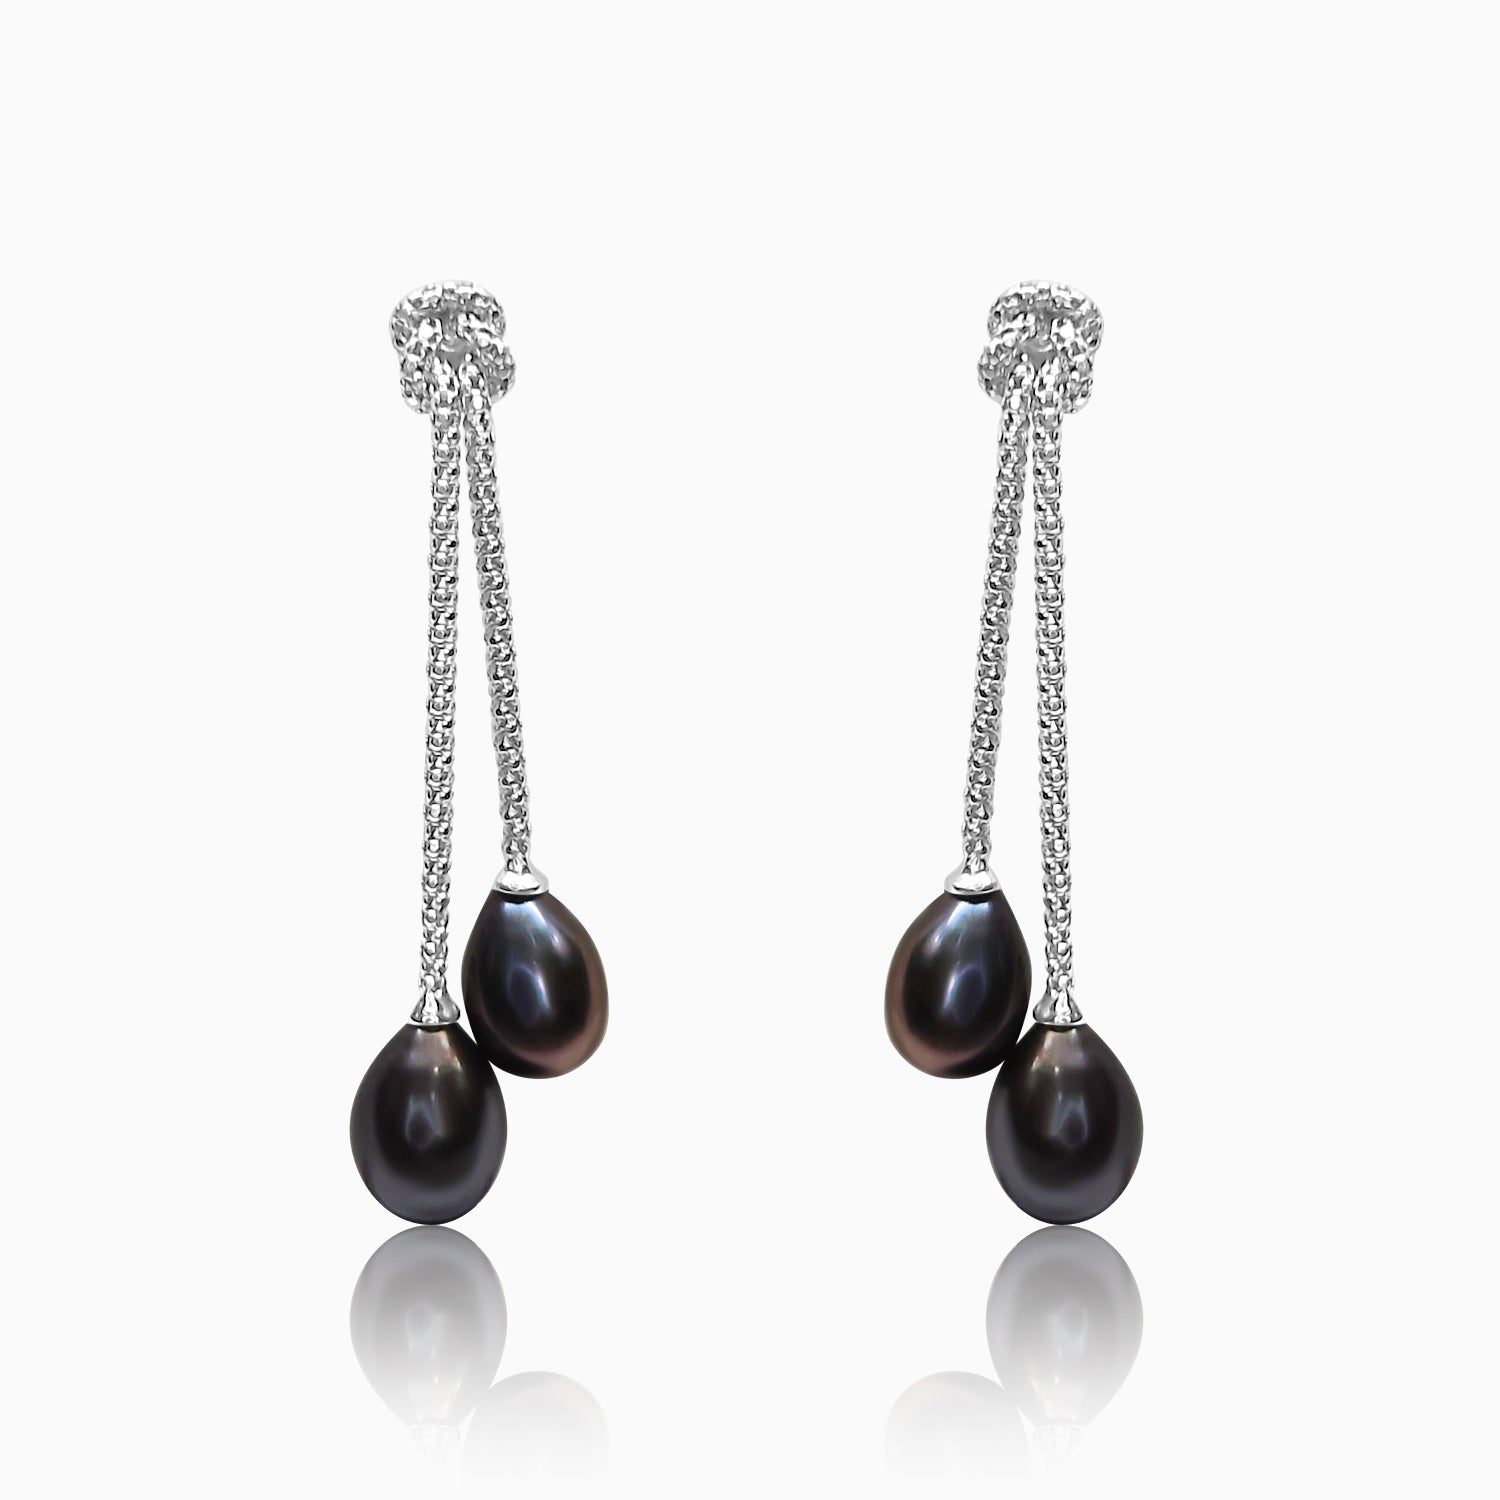 Silver Knotted Italian Chain Black Pearl Earrings